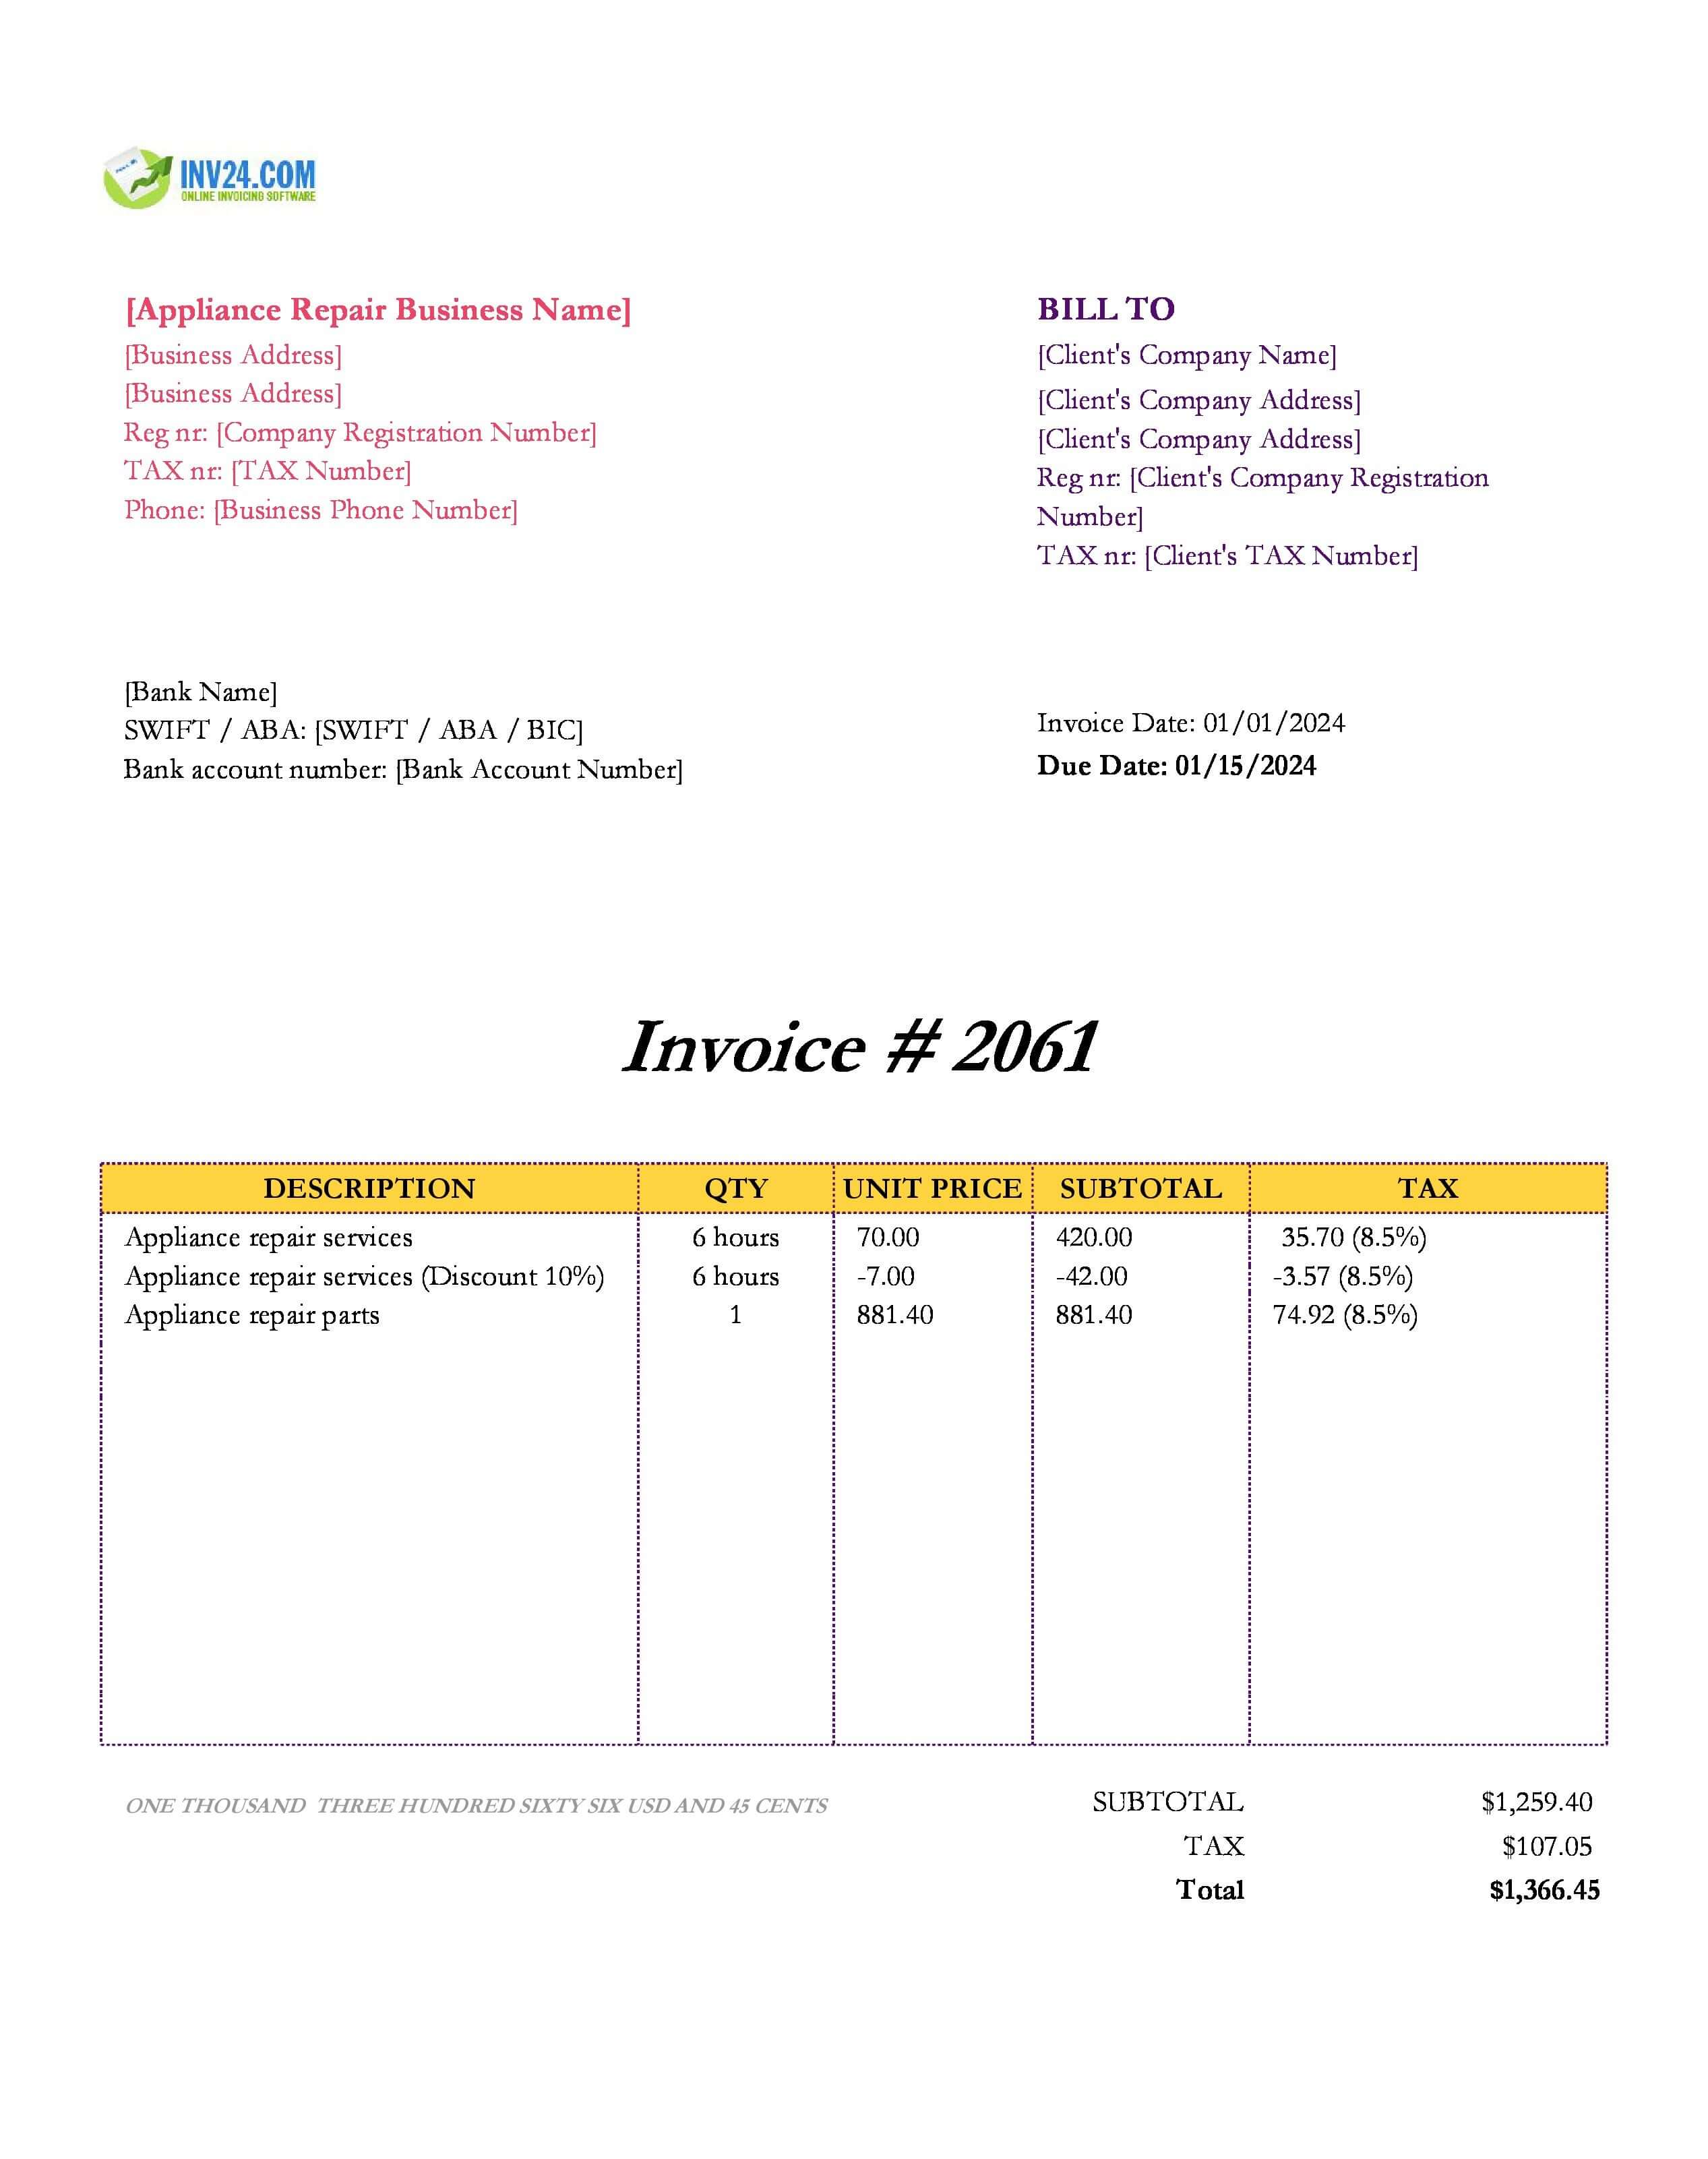 Appliance repair invoice template